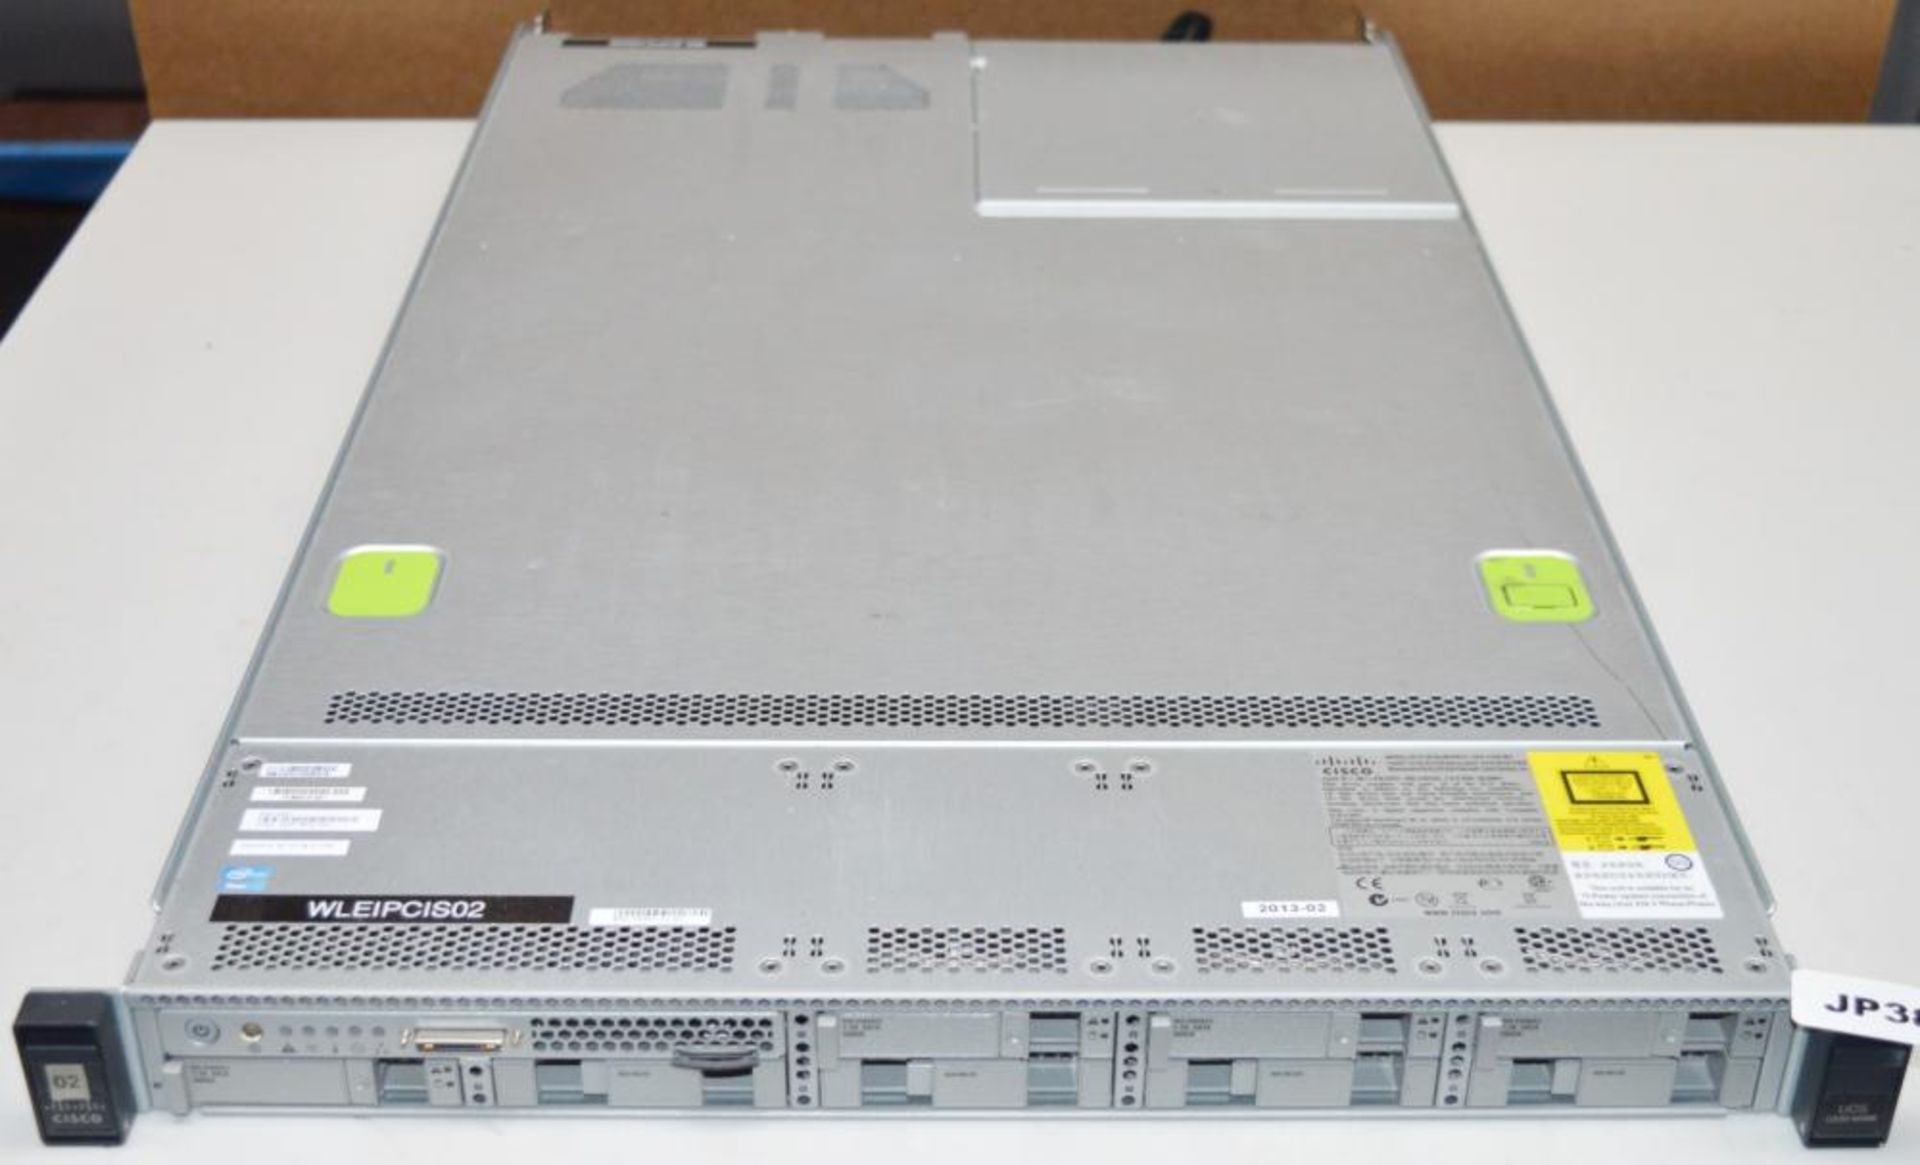 1 x Cisco UCS C220 M3 Server With Dual E5-2609 Quad Core Processors and 32gb Ram